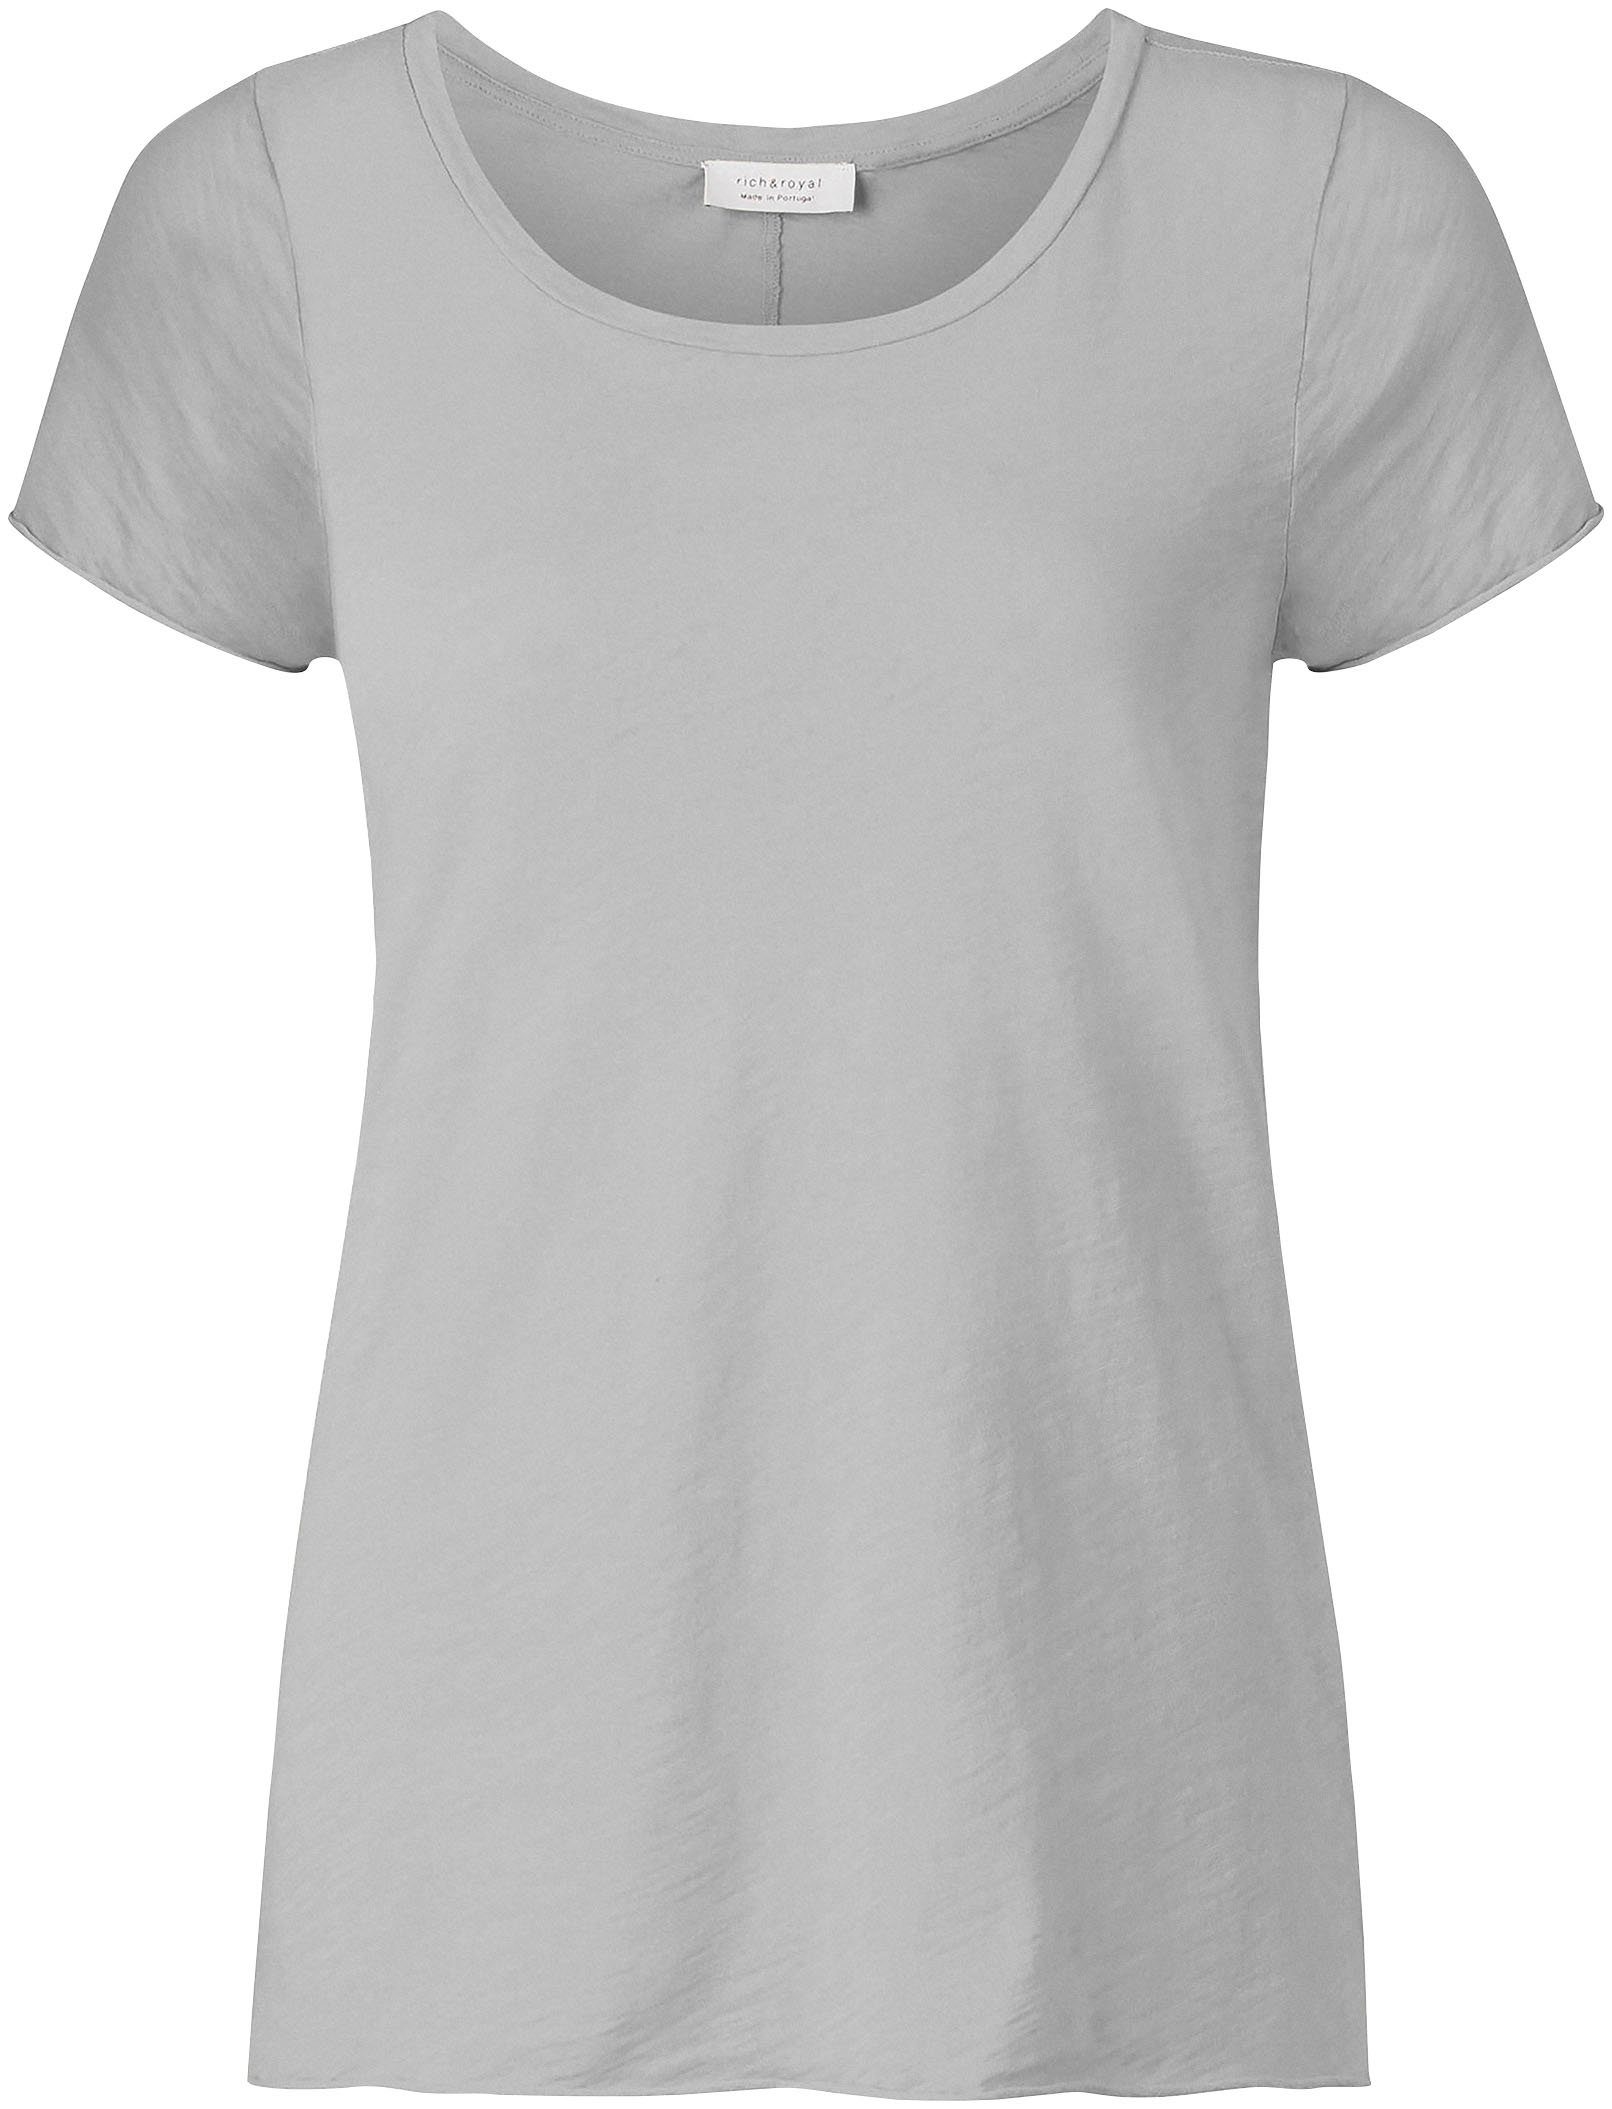 Rich & grey T-Shirt femininer melange Royal Basic-Form in